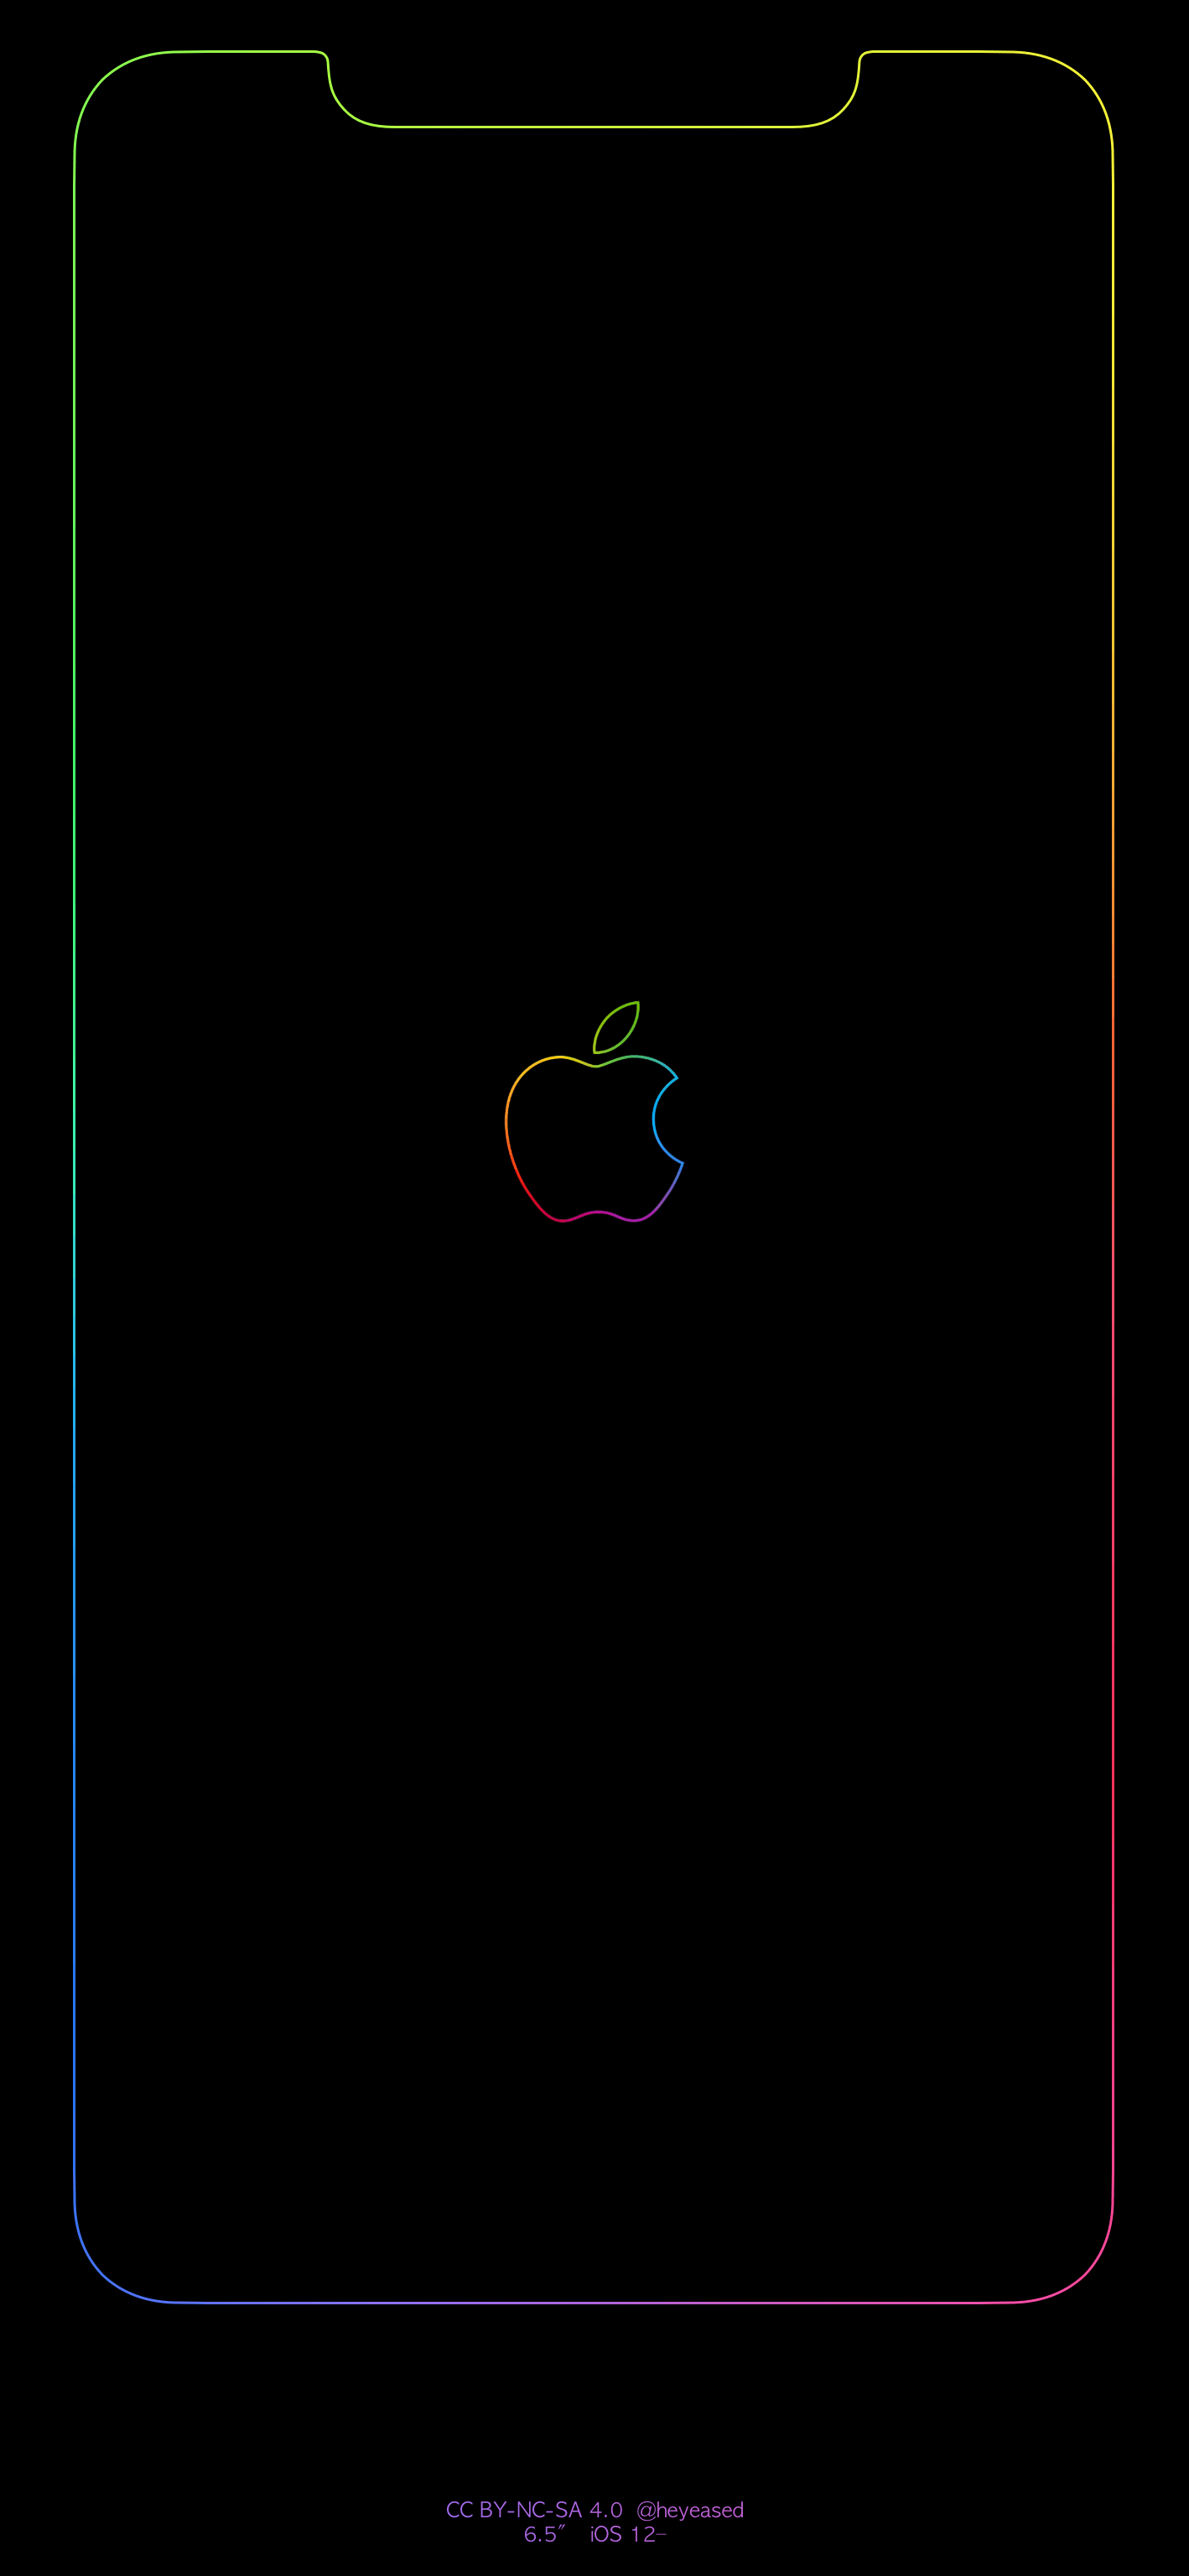 iPhone Apple Logo - XS Max rainbow border & apple logo